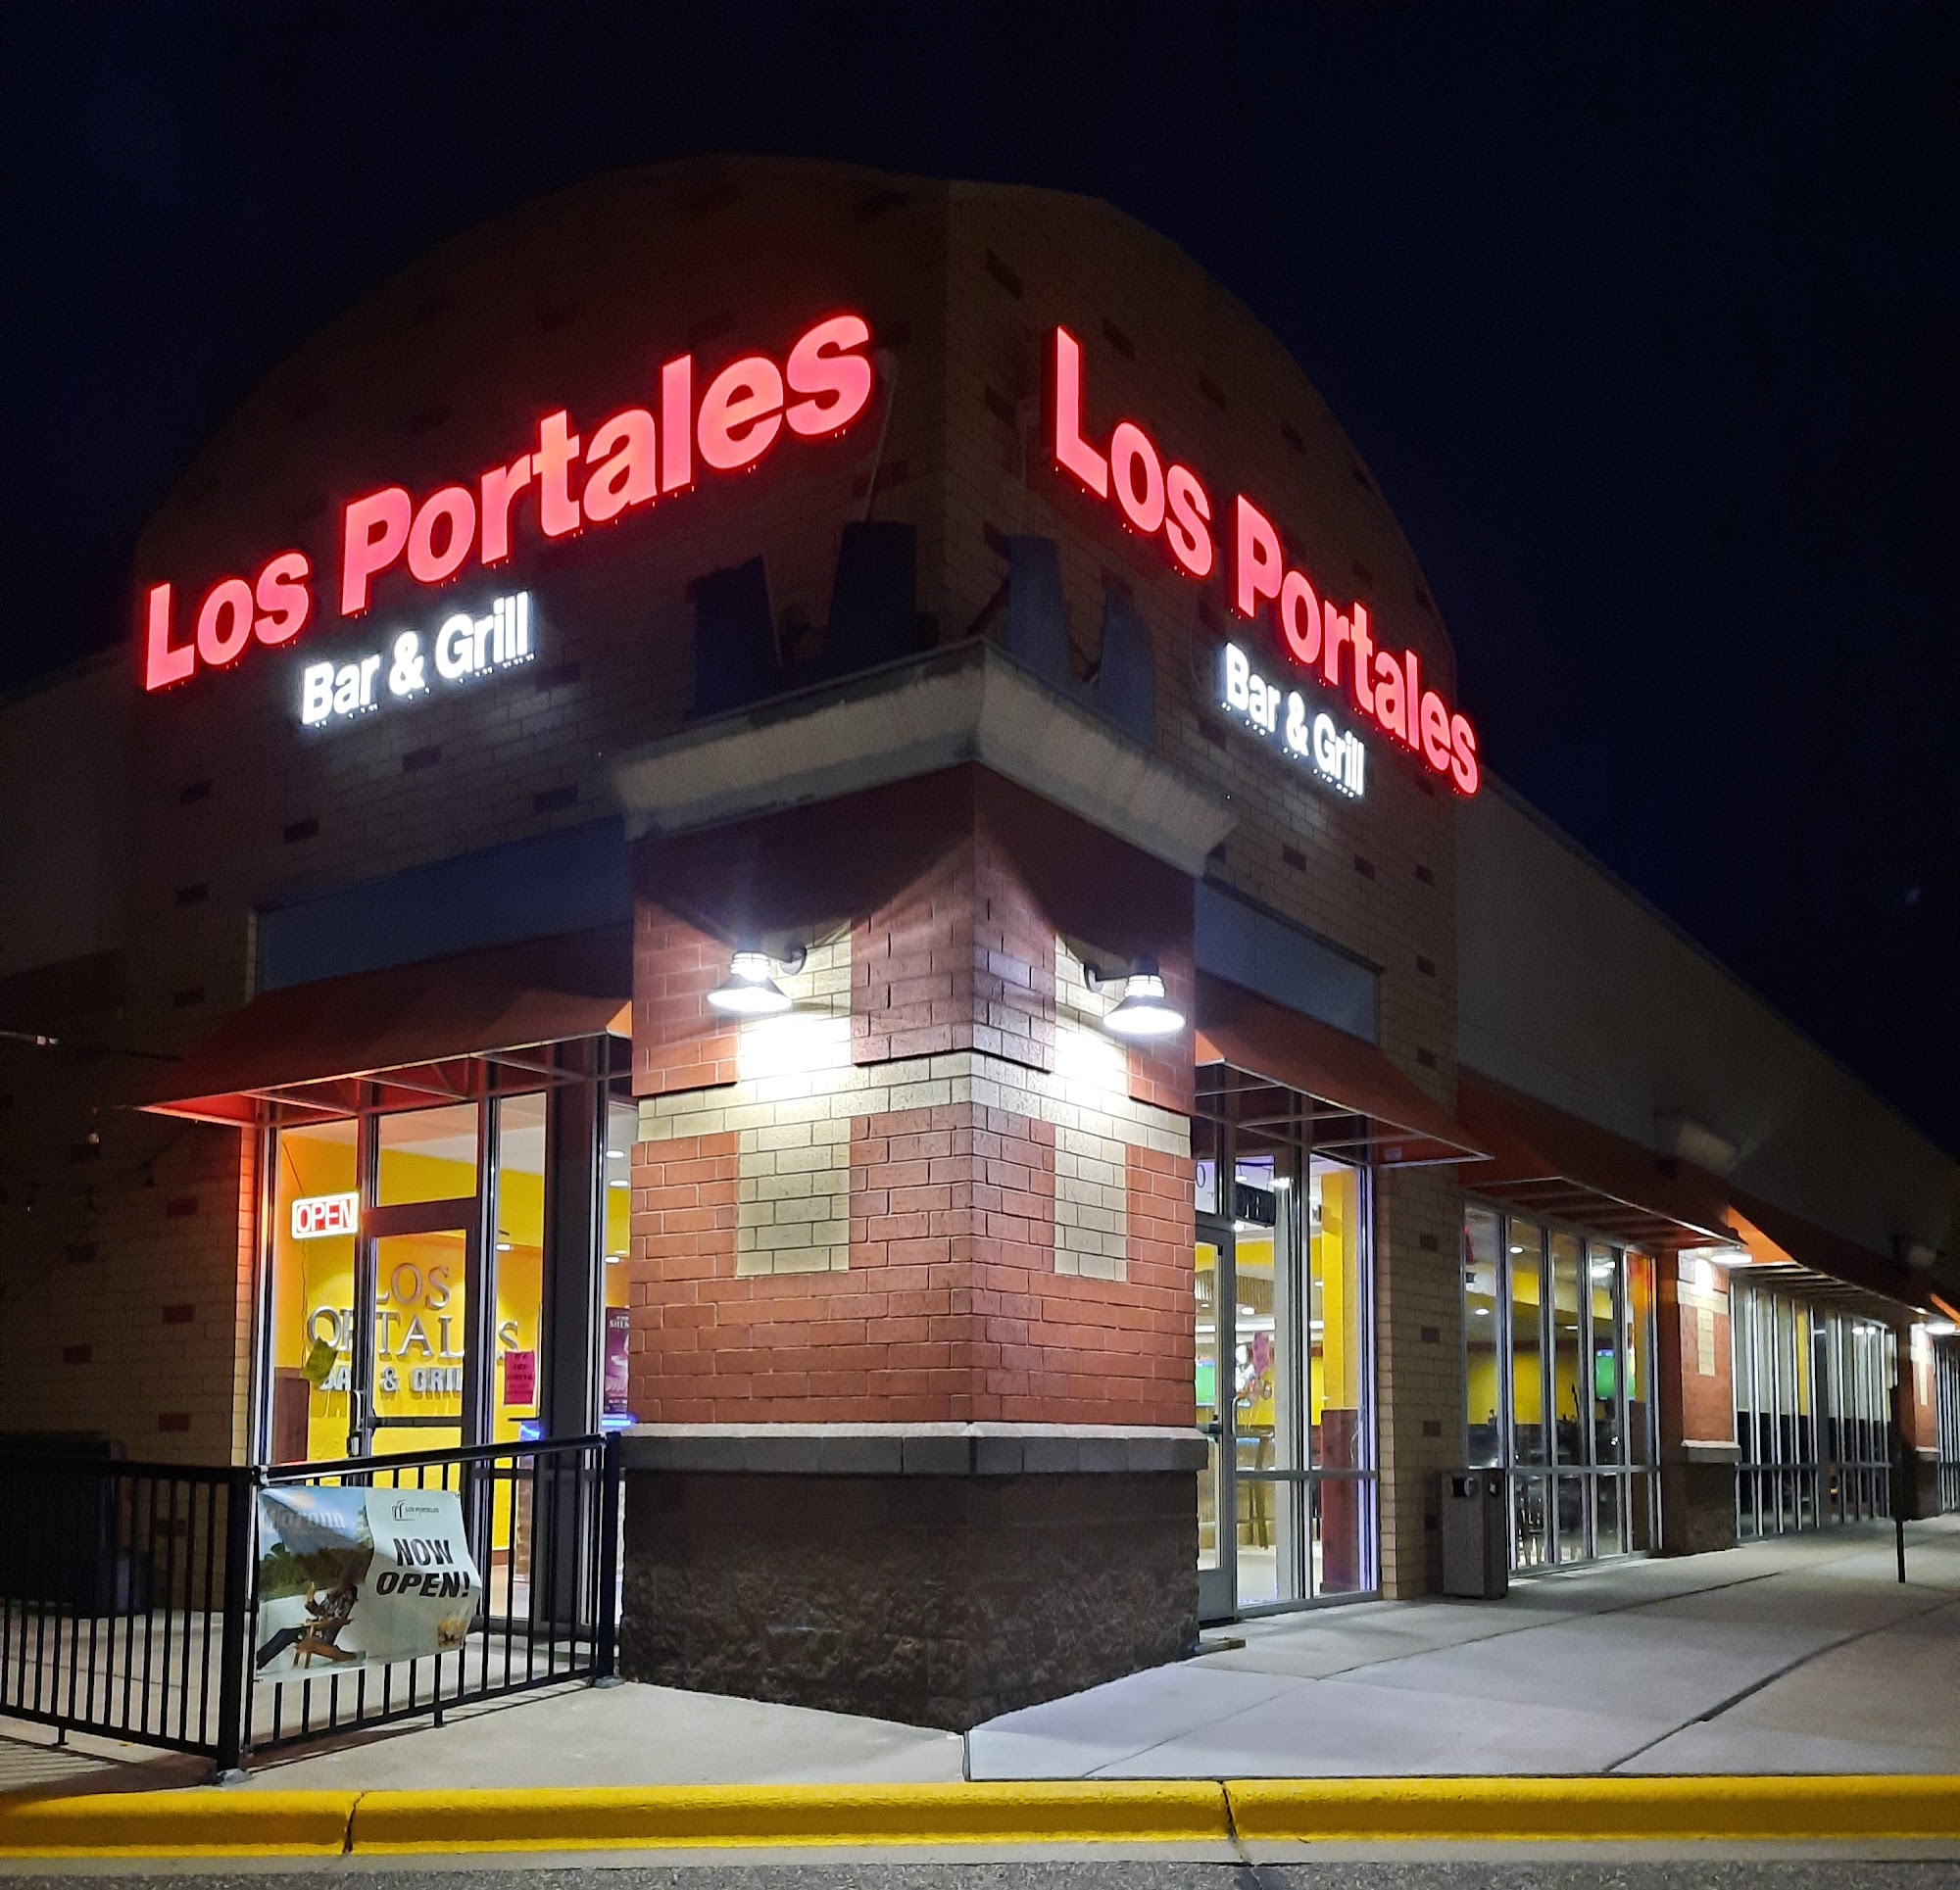 Los Portales Bar & Grill